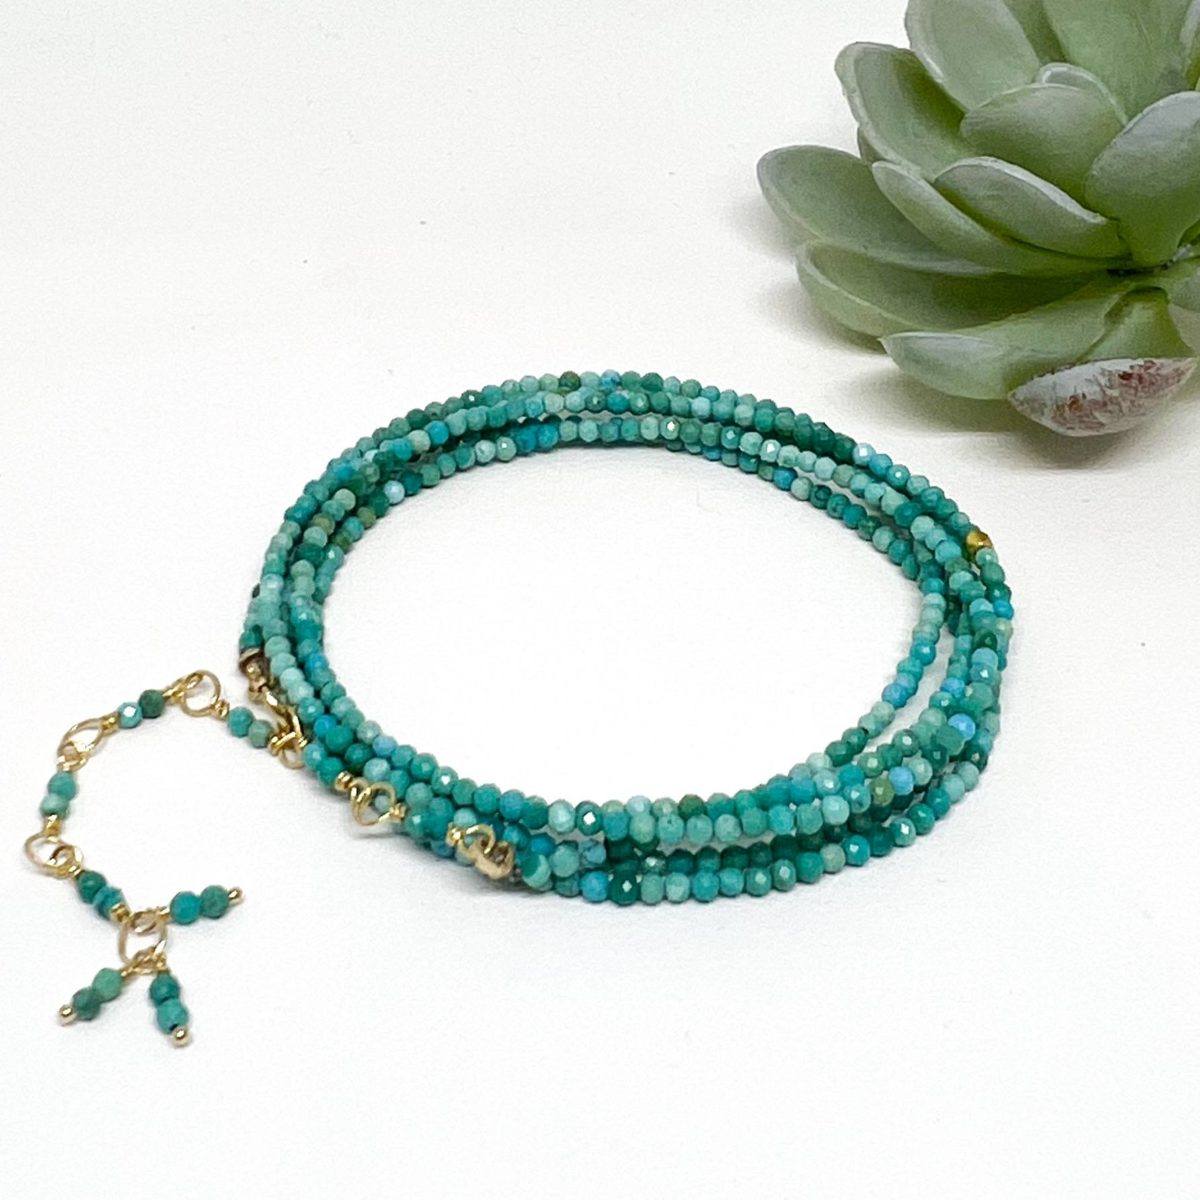 Anne Sportun Wrap Bracelet - Turquoise